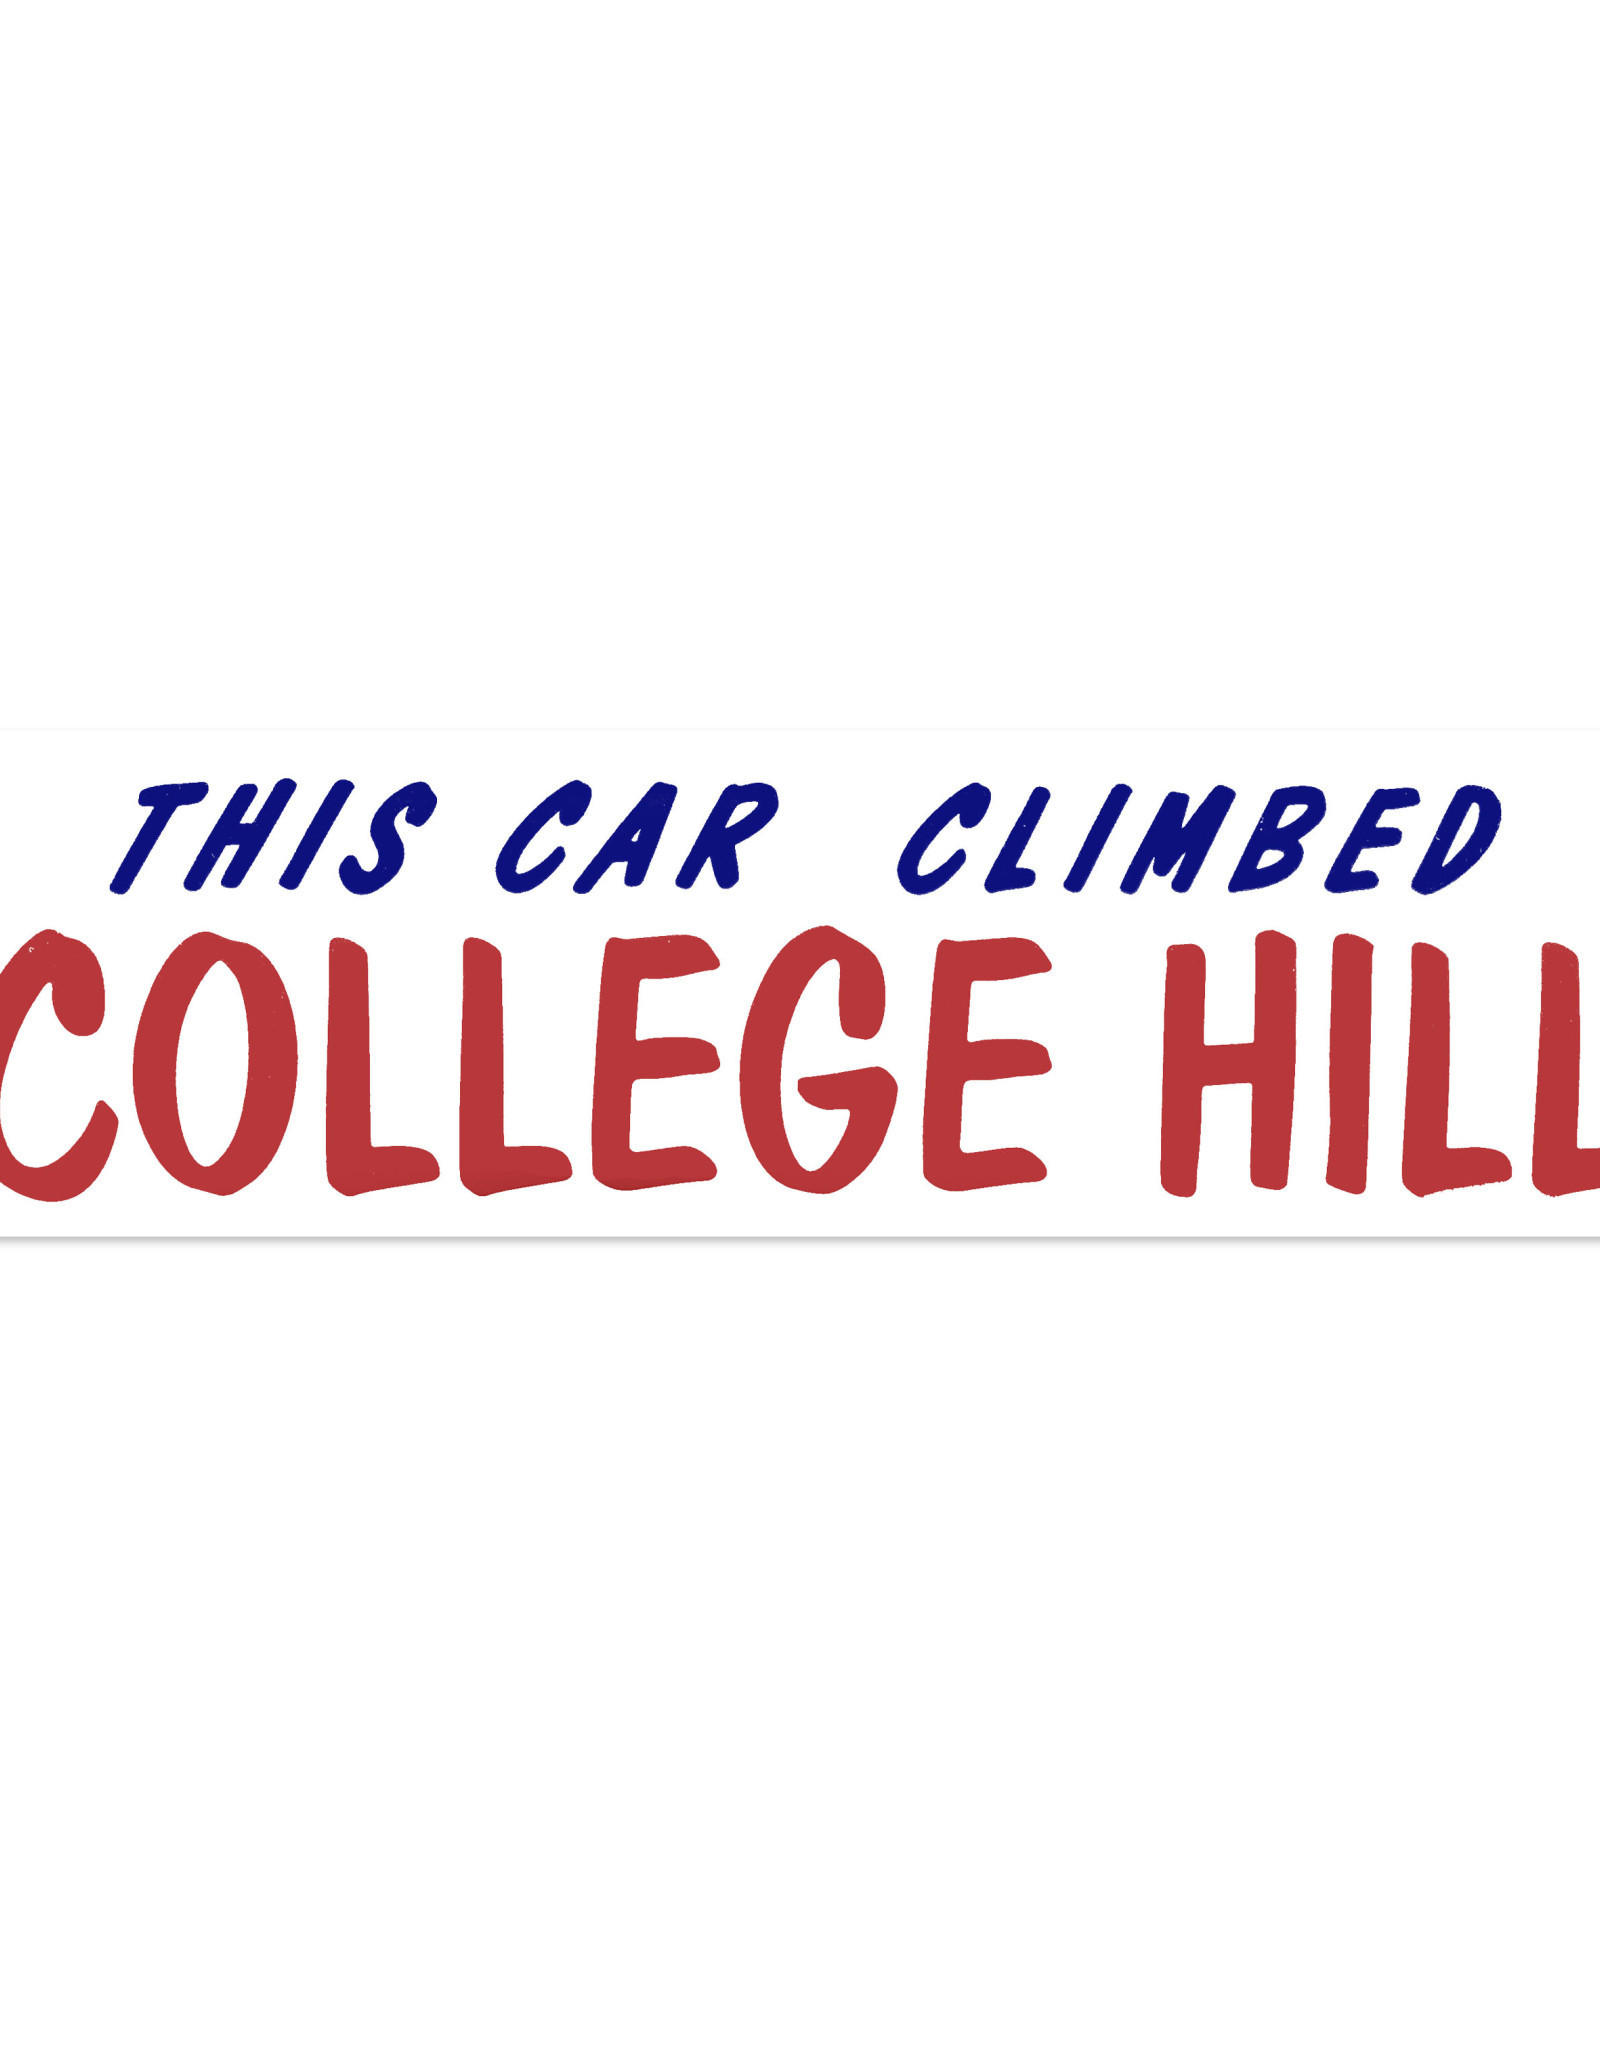 This Car Climbed College Hill Bumper Sticker